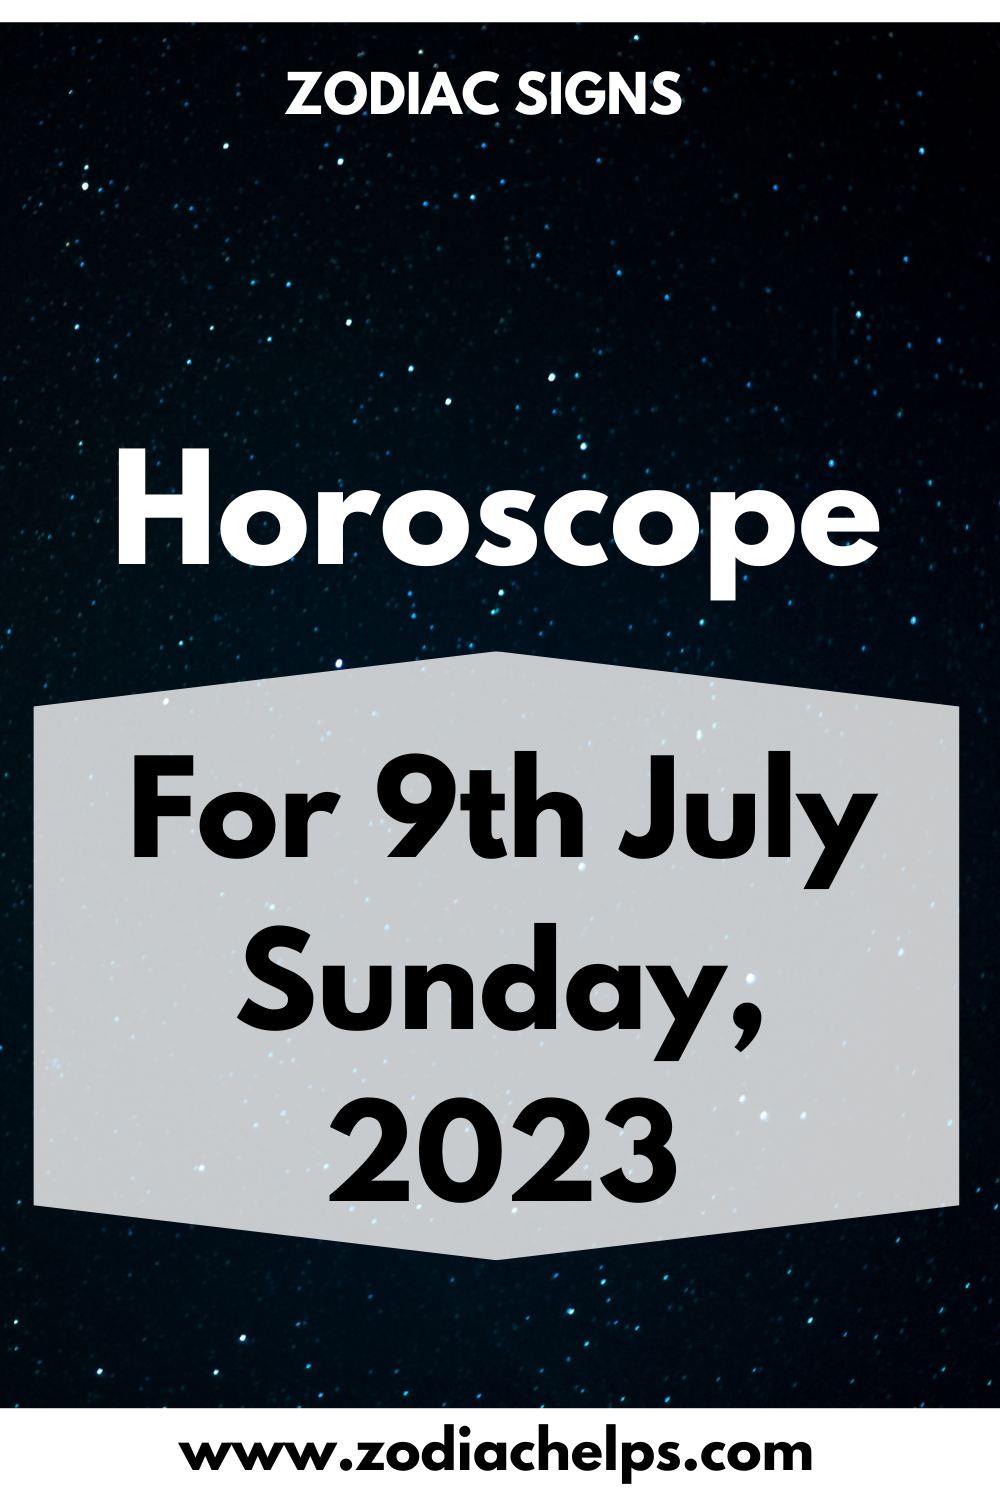 Horoscope for 9th July Sunday, 2023